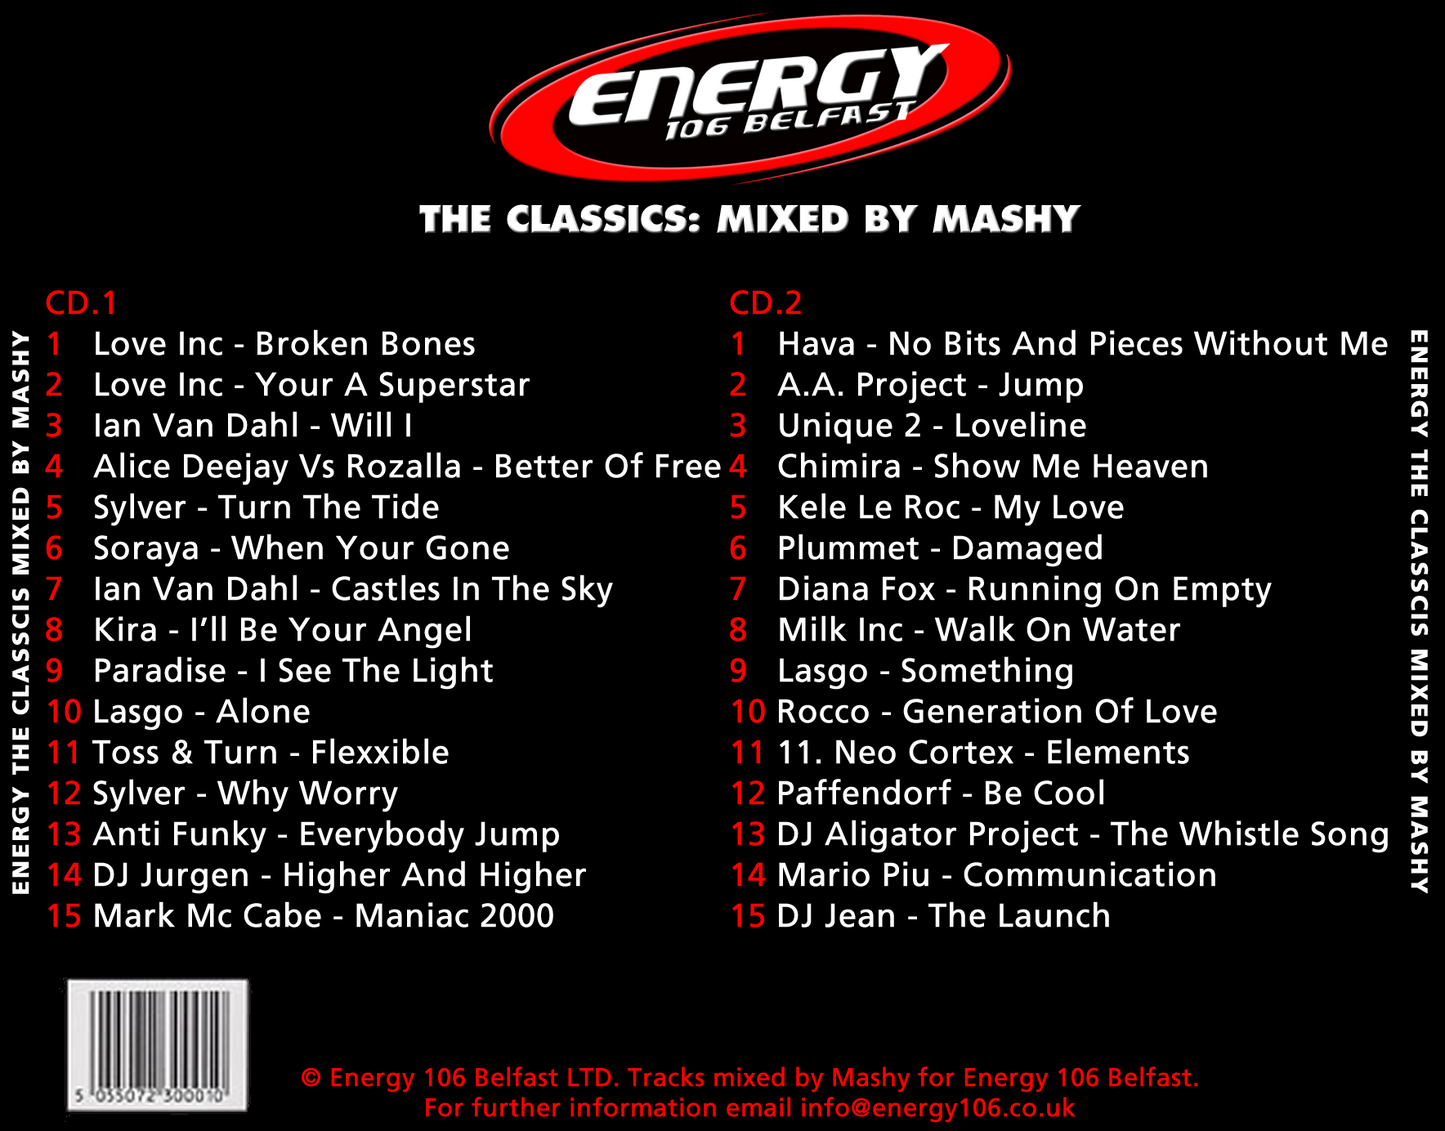 Energy The Classics Album